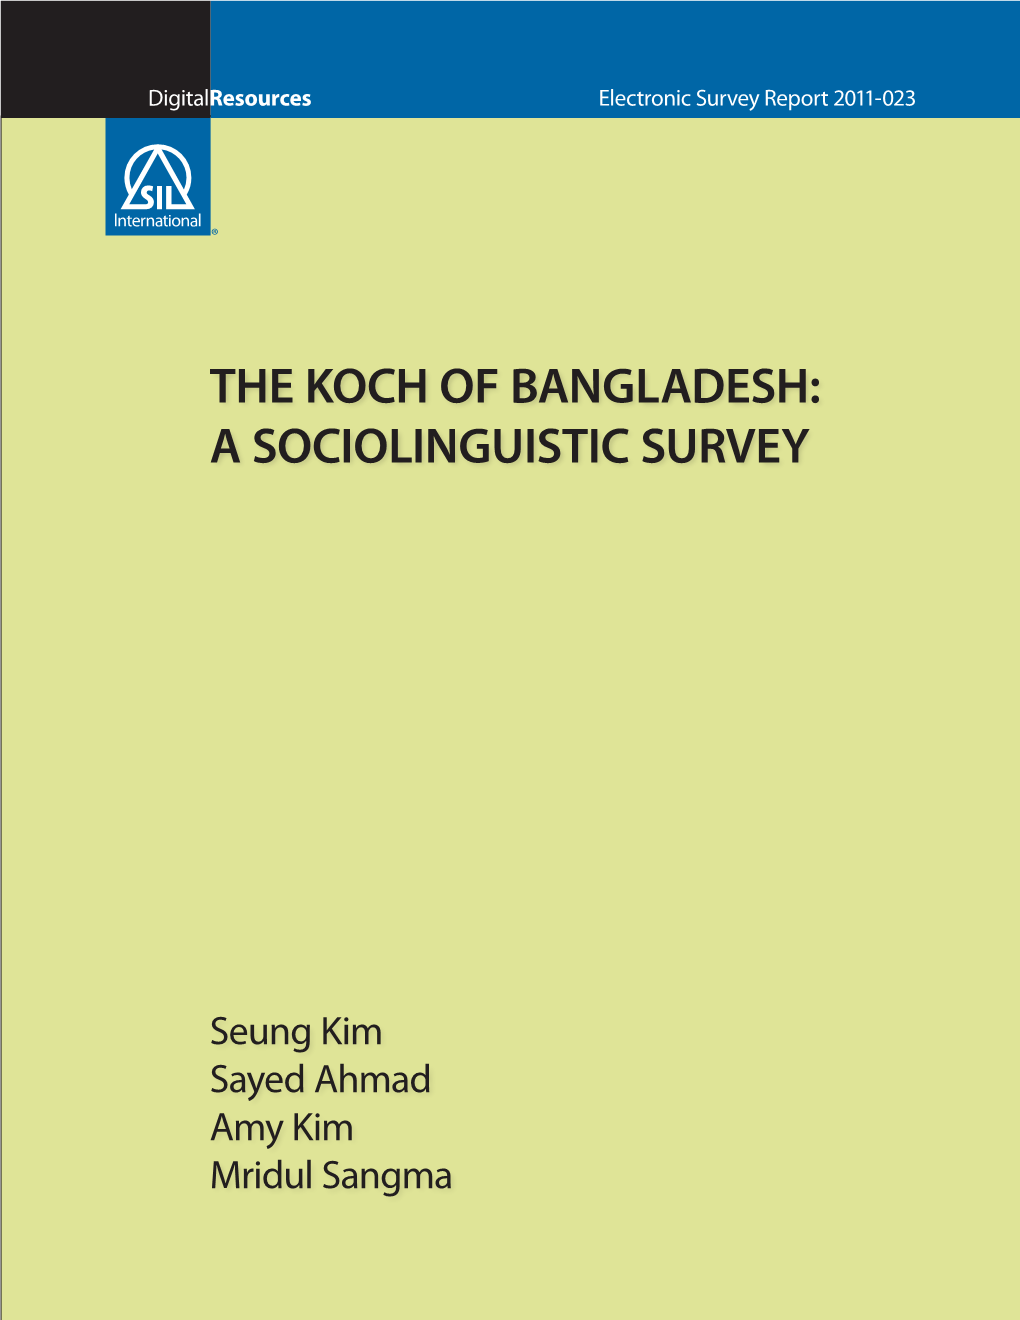 The Koch of Bangladesh: a Sociolinguistic Survey